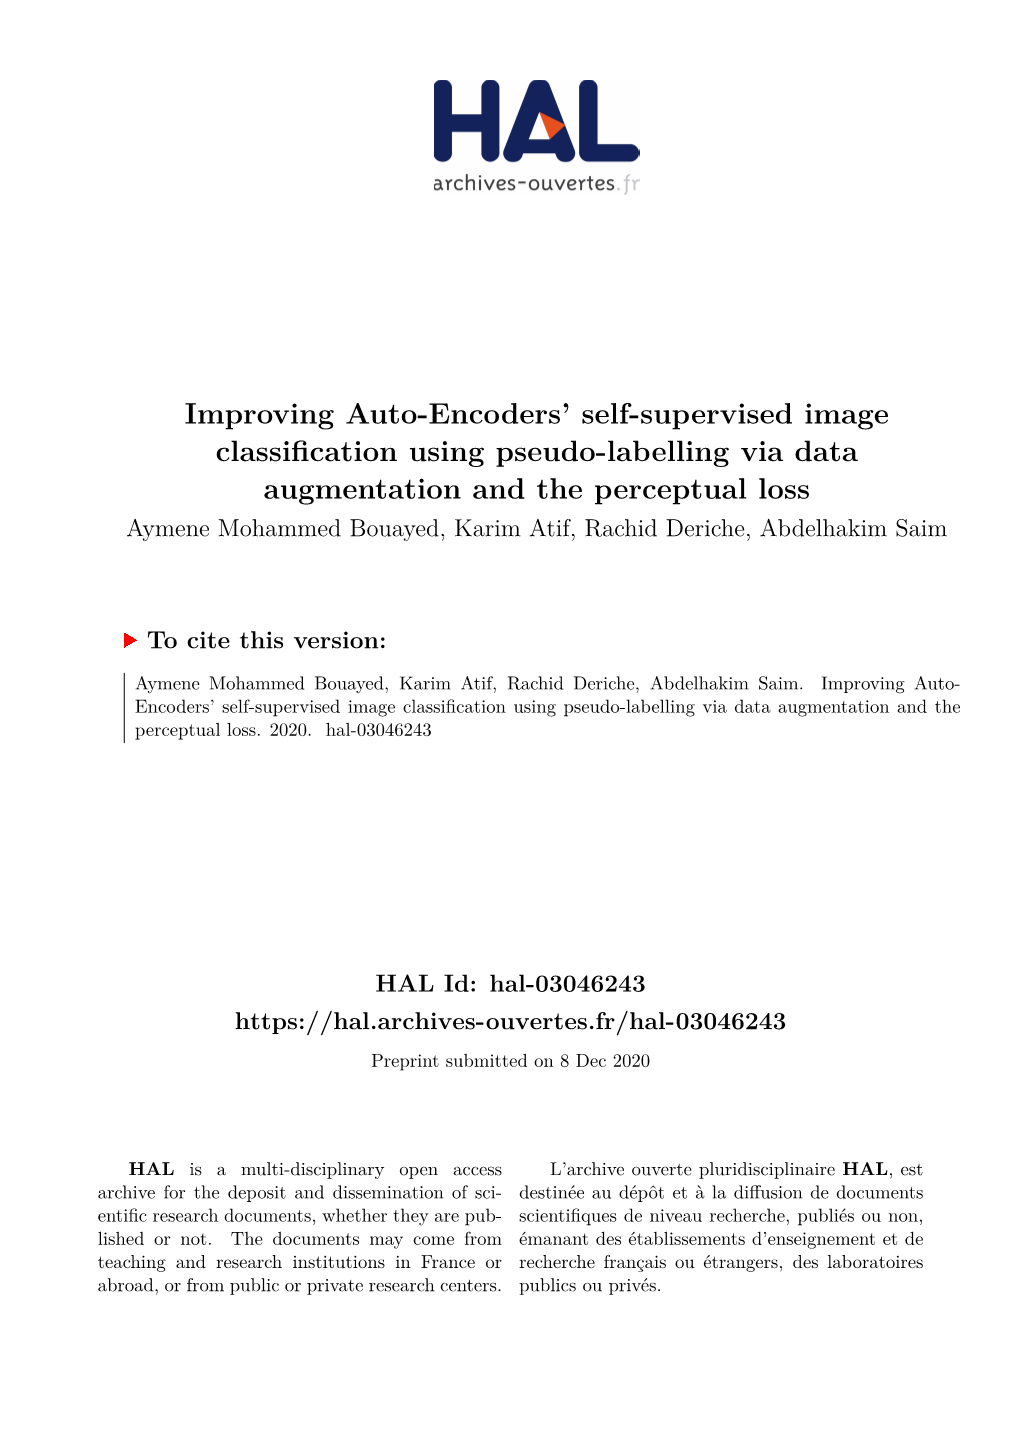 Improving Auto-Encoders' Self-Supervised Image Classification